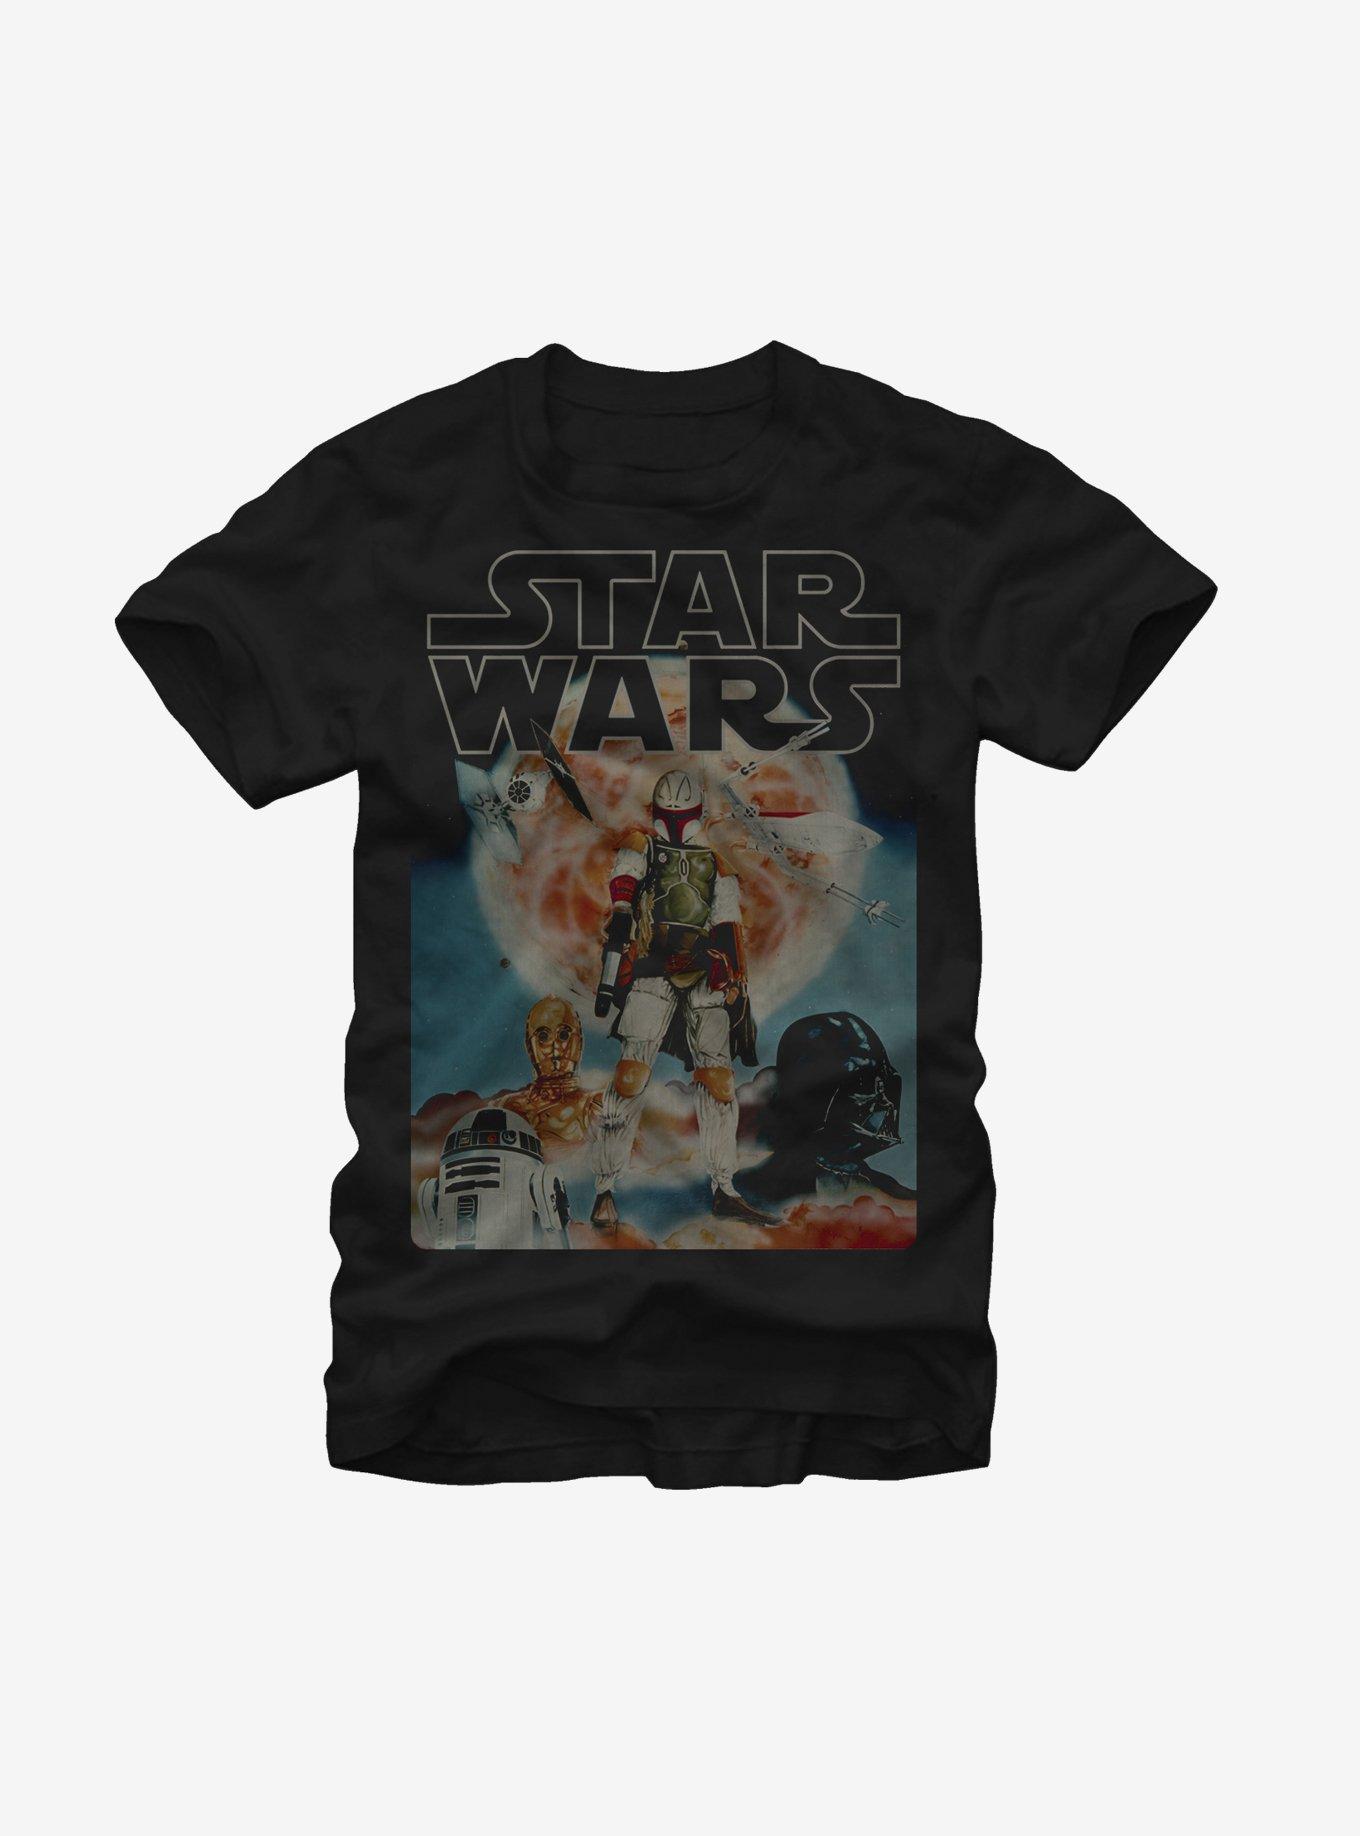 Star Wars Boba Fett and Droids T-Shirt